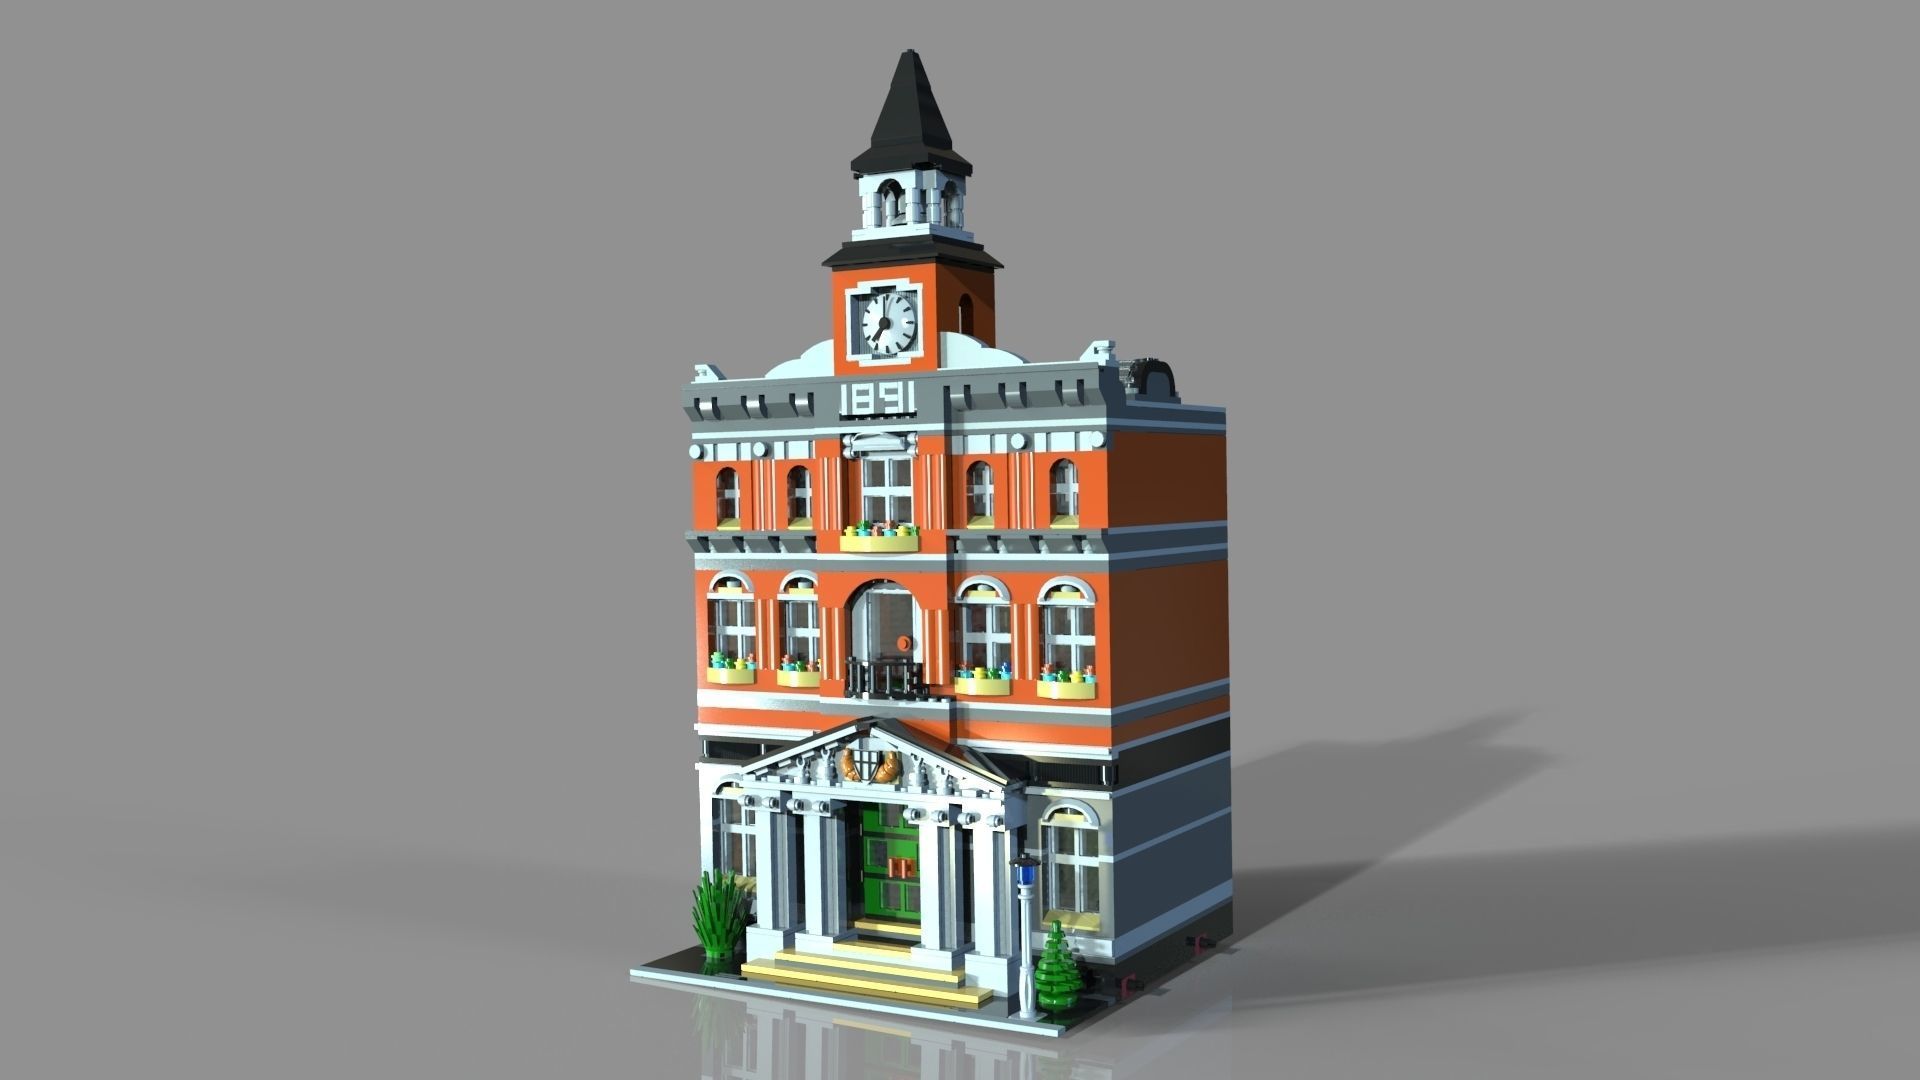 Lego town hall model by Vladim00719 | 3DOcean